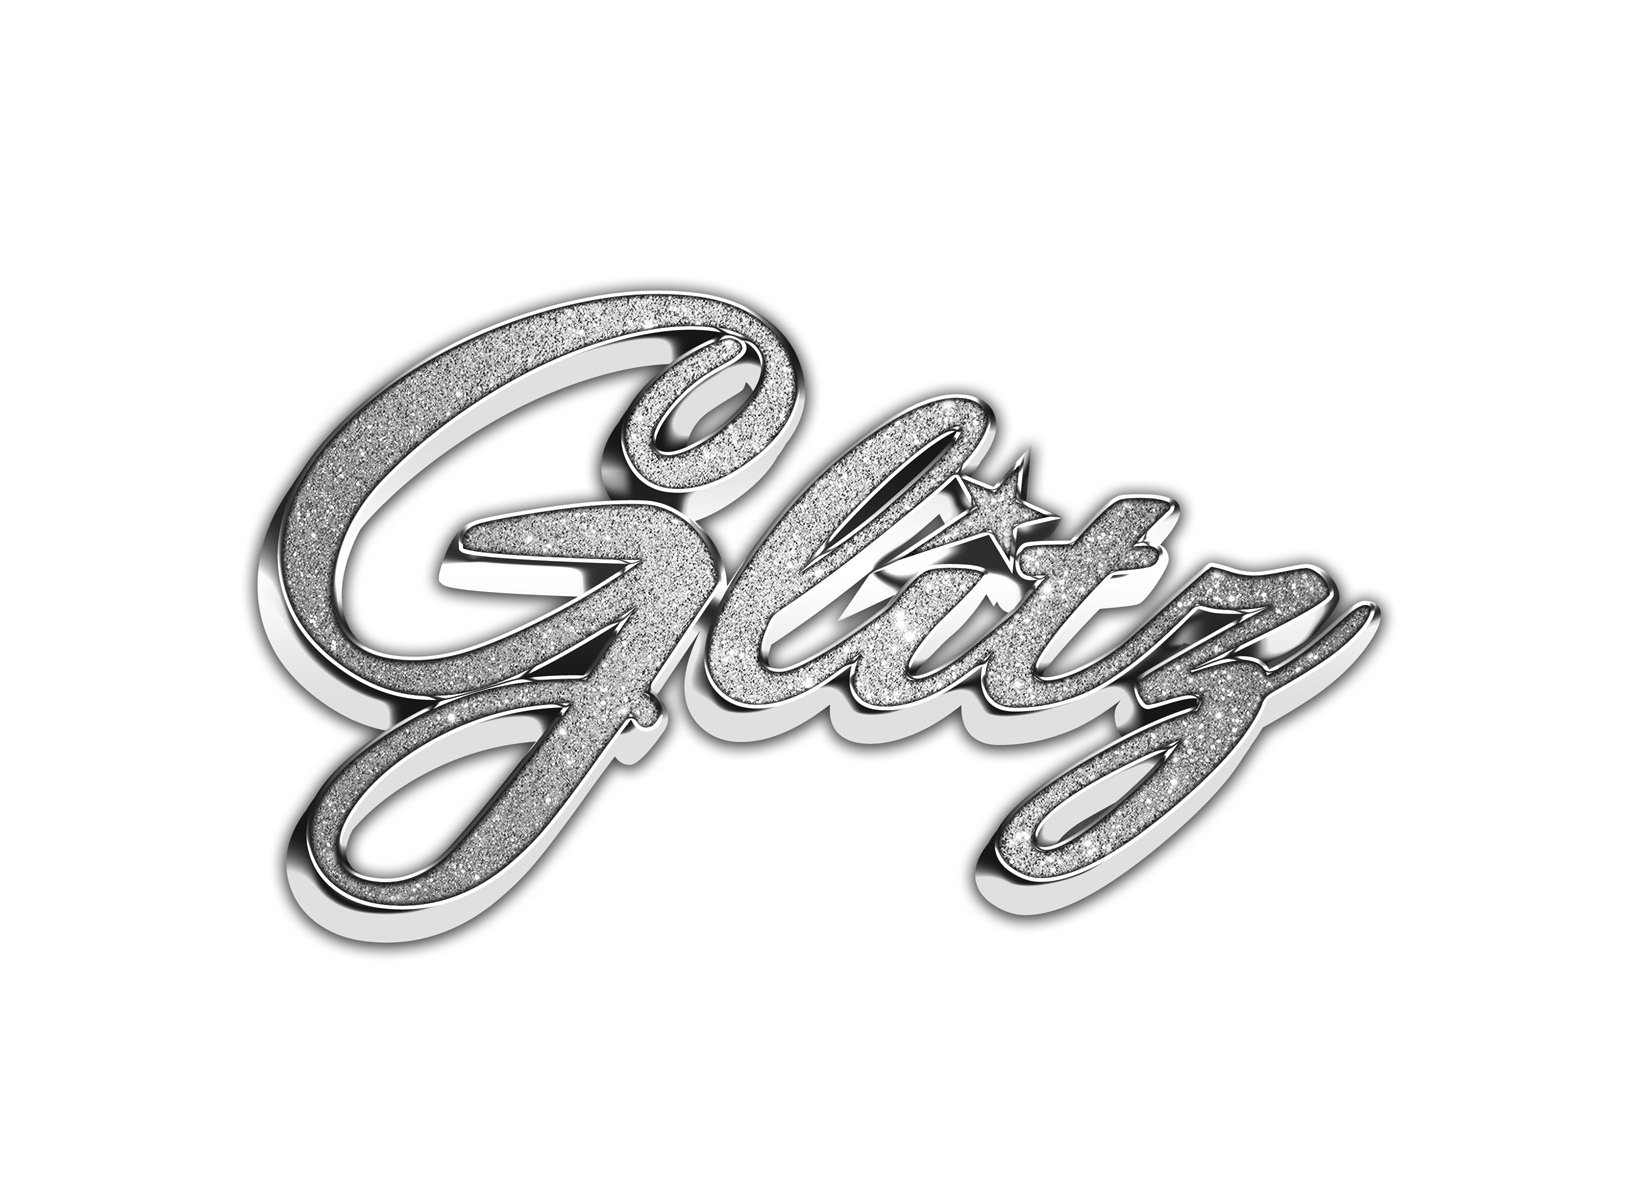 Trademark Logo GLITZ